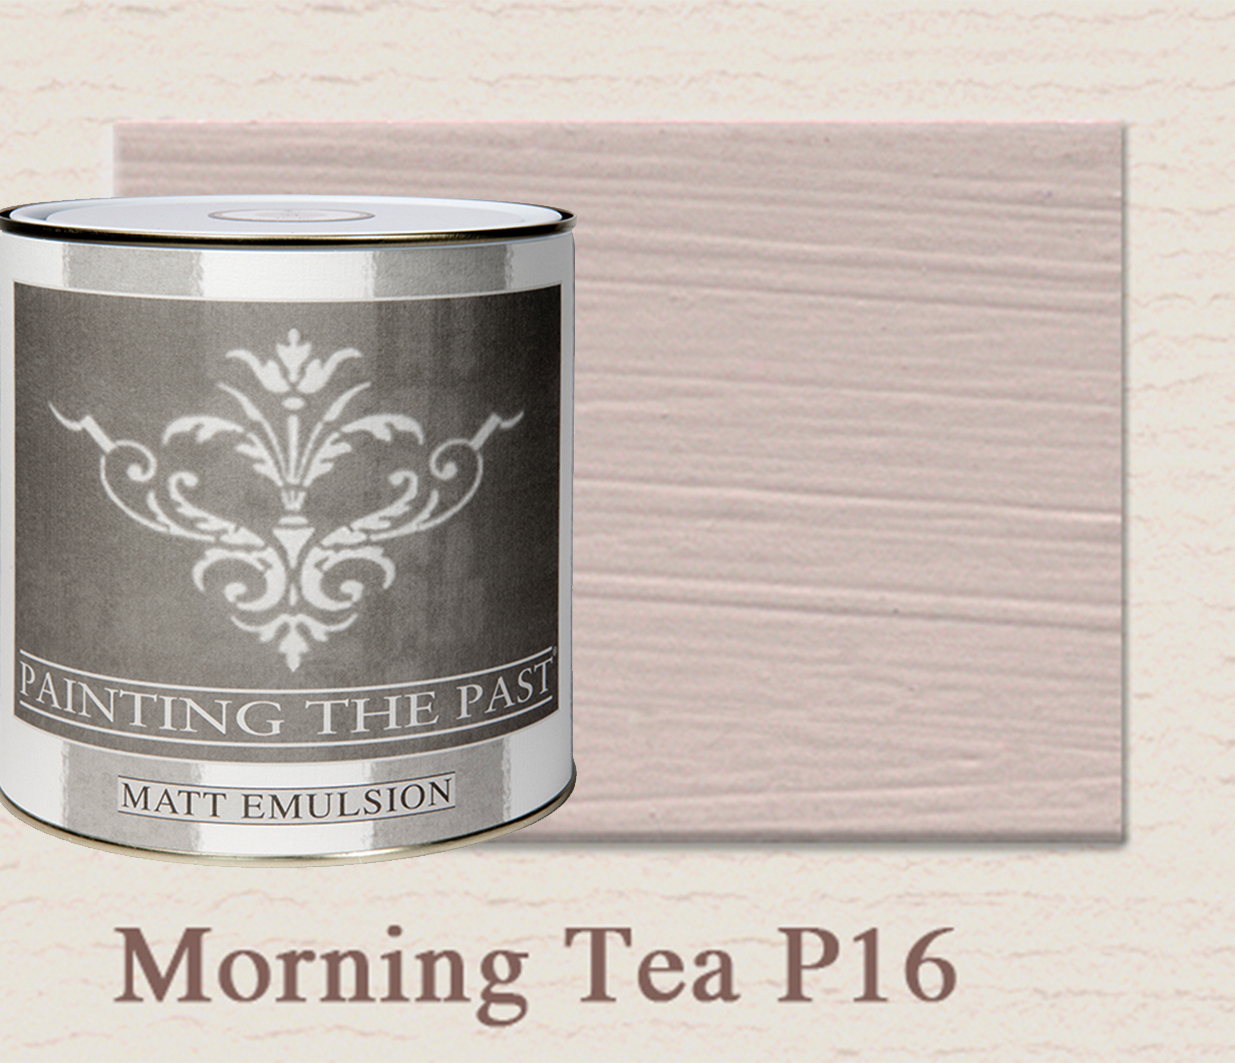 Painting The Past Matt Emulsion Morning Tea